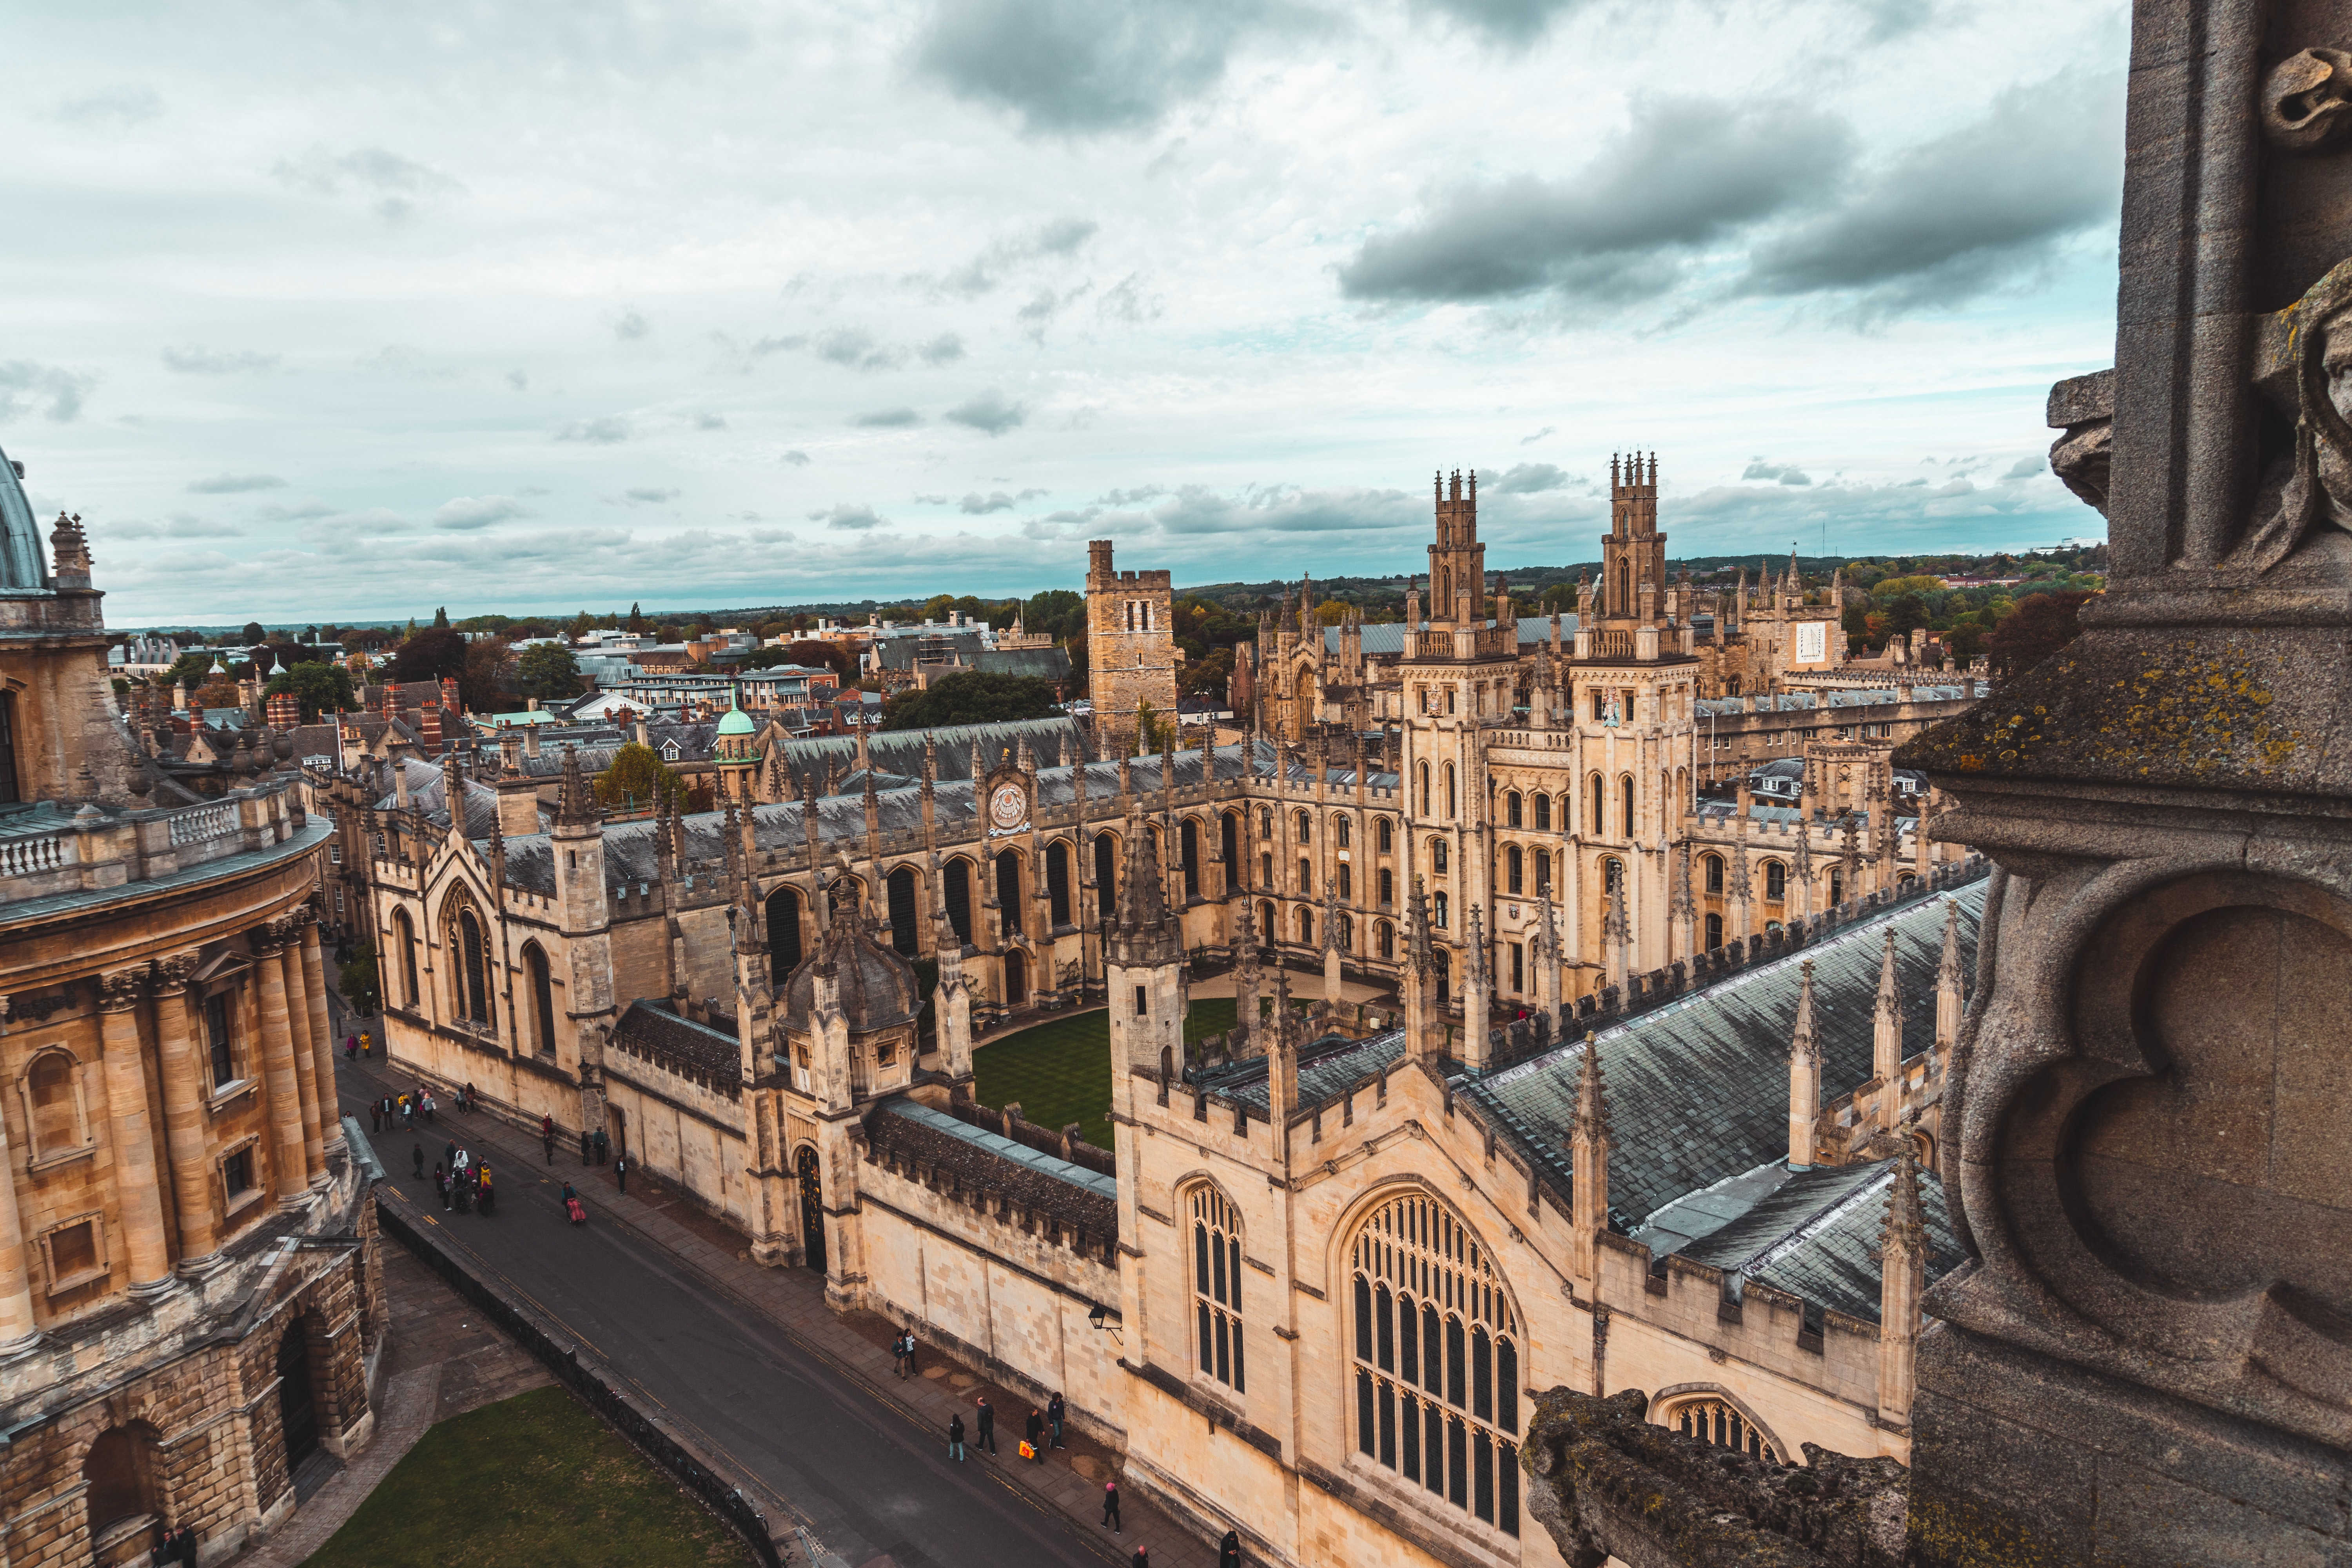  Oxford